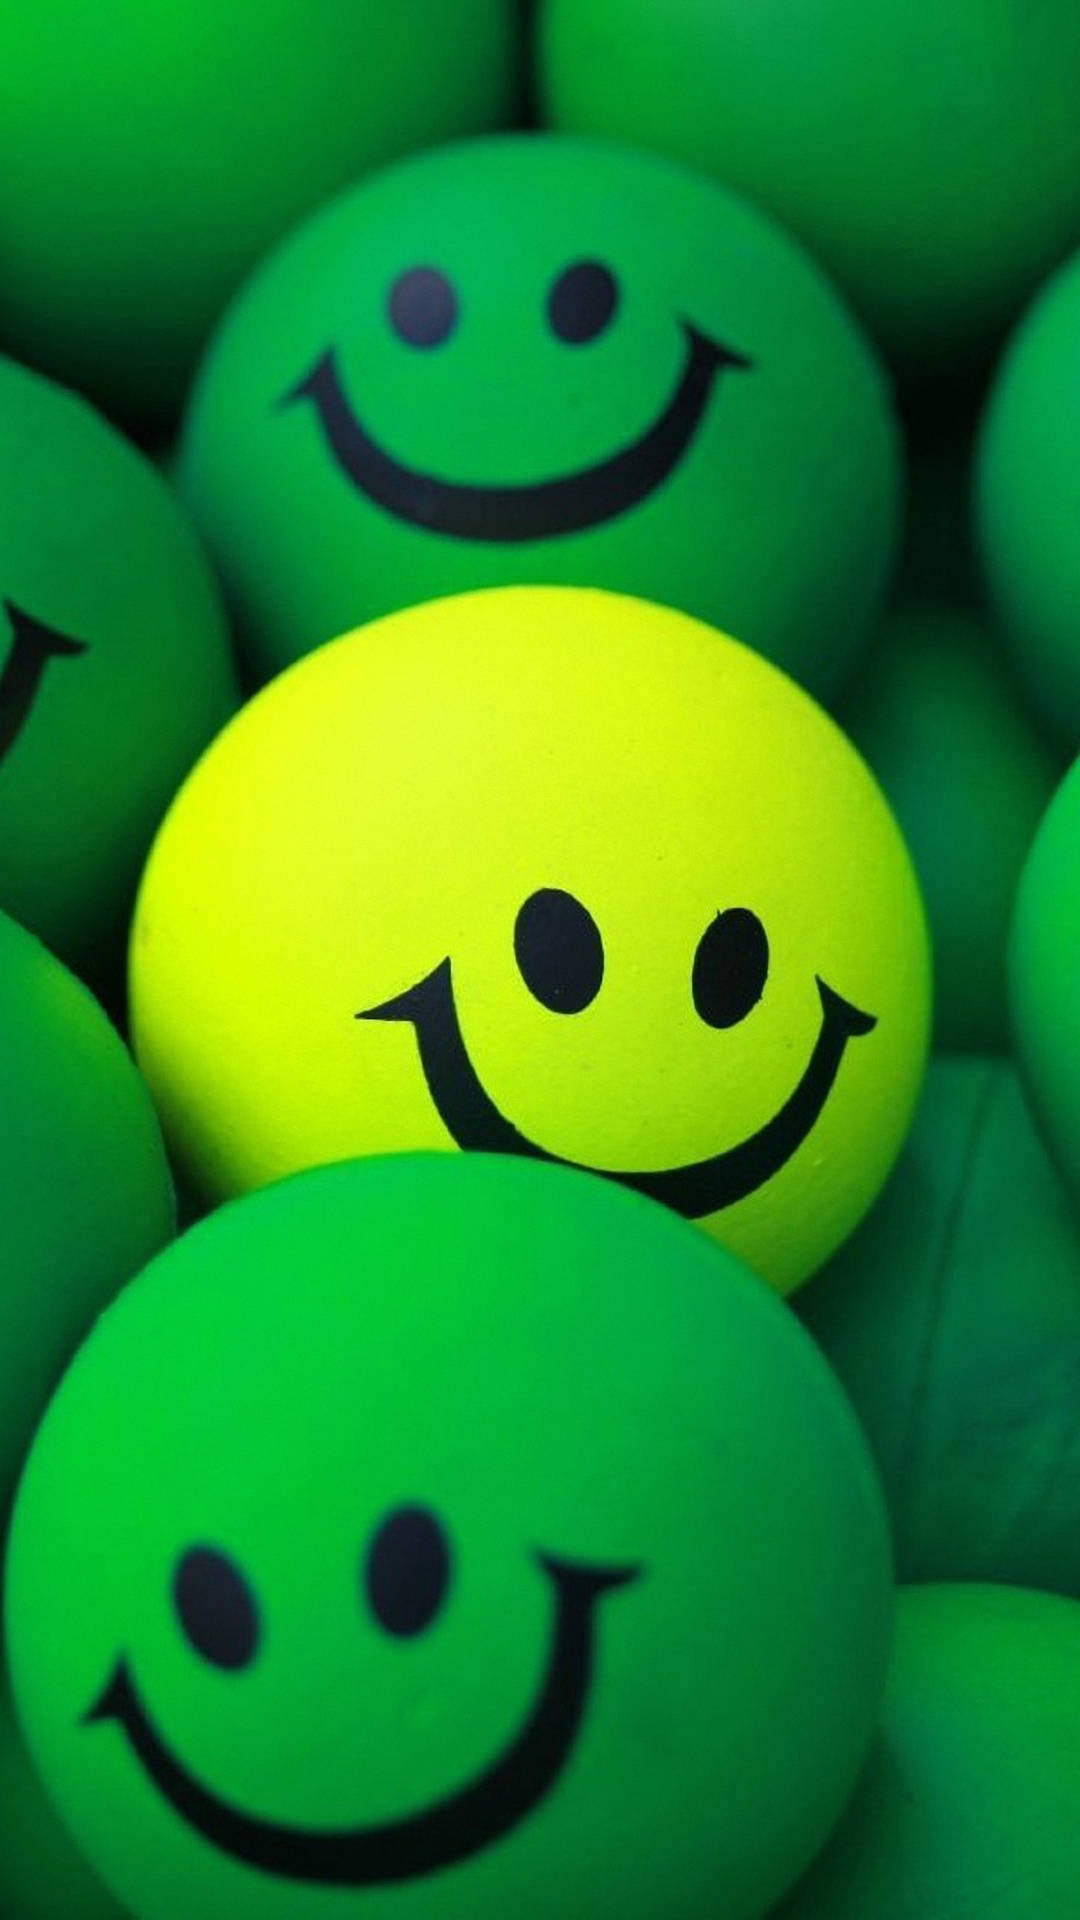 Expressive Yellow Smiley Ball Amongst Green Balls Background